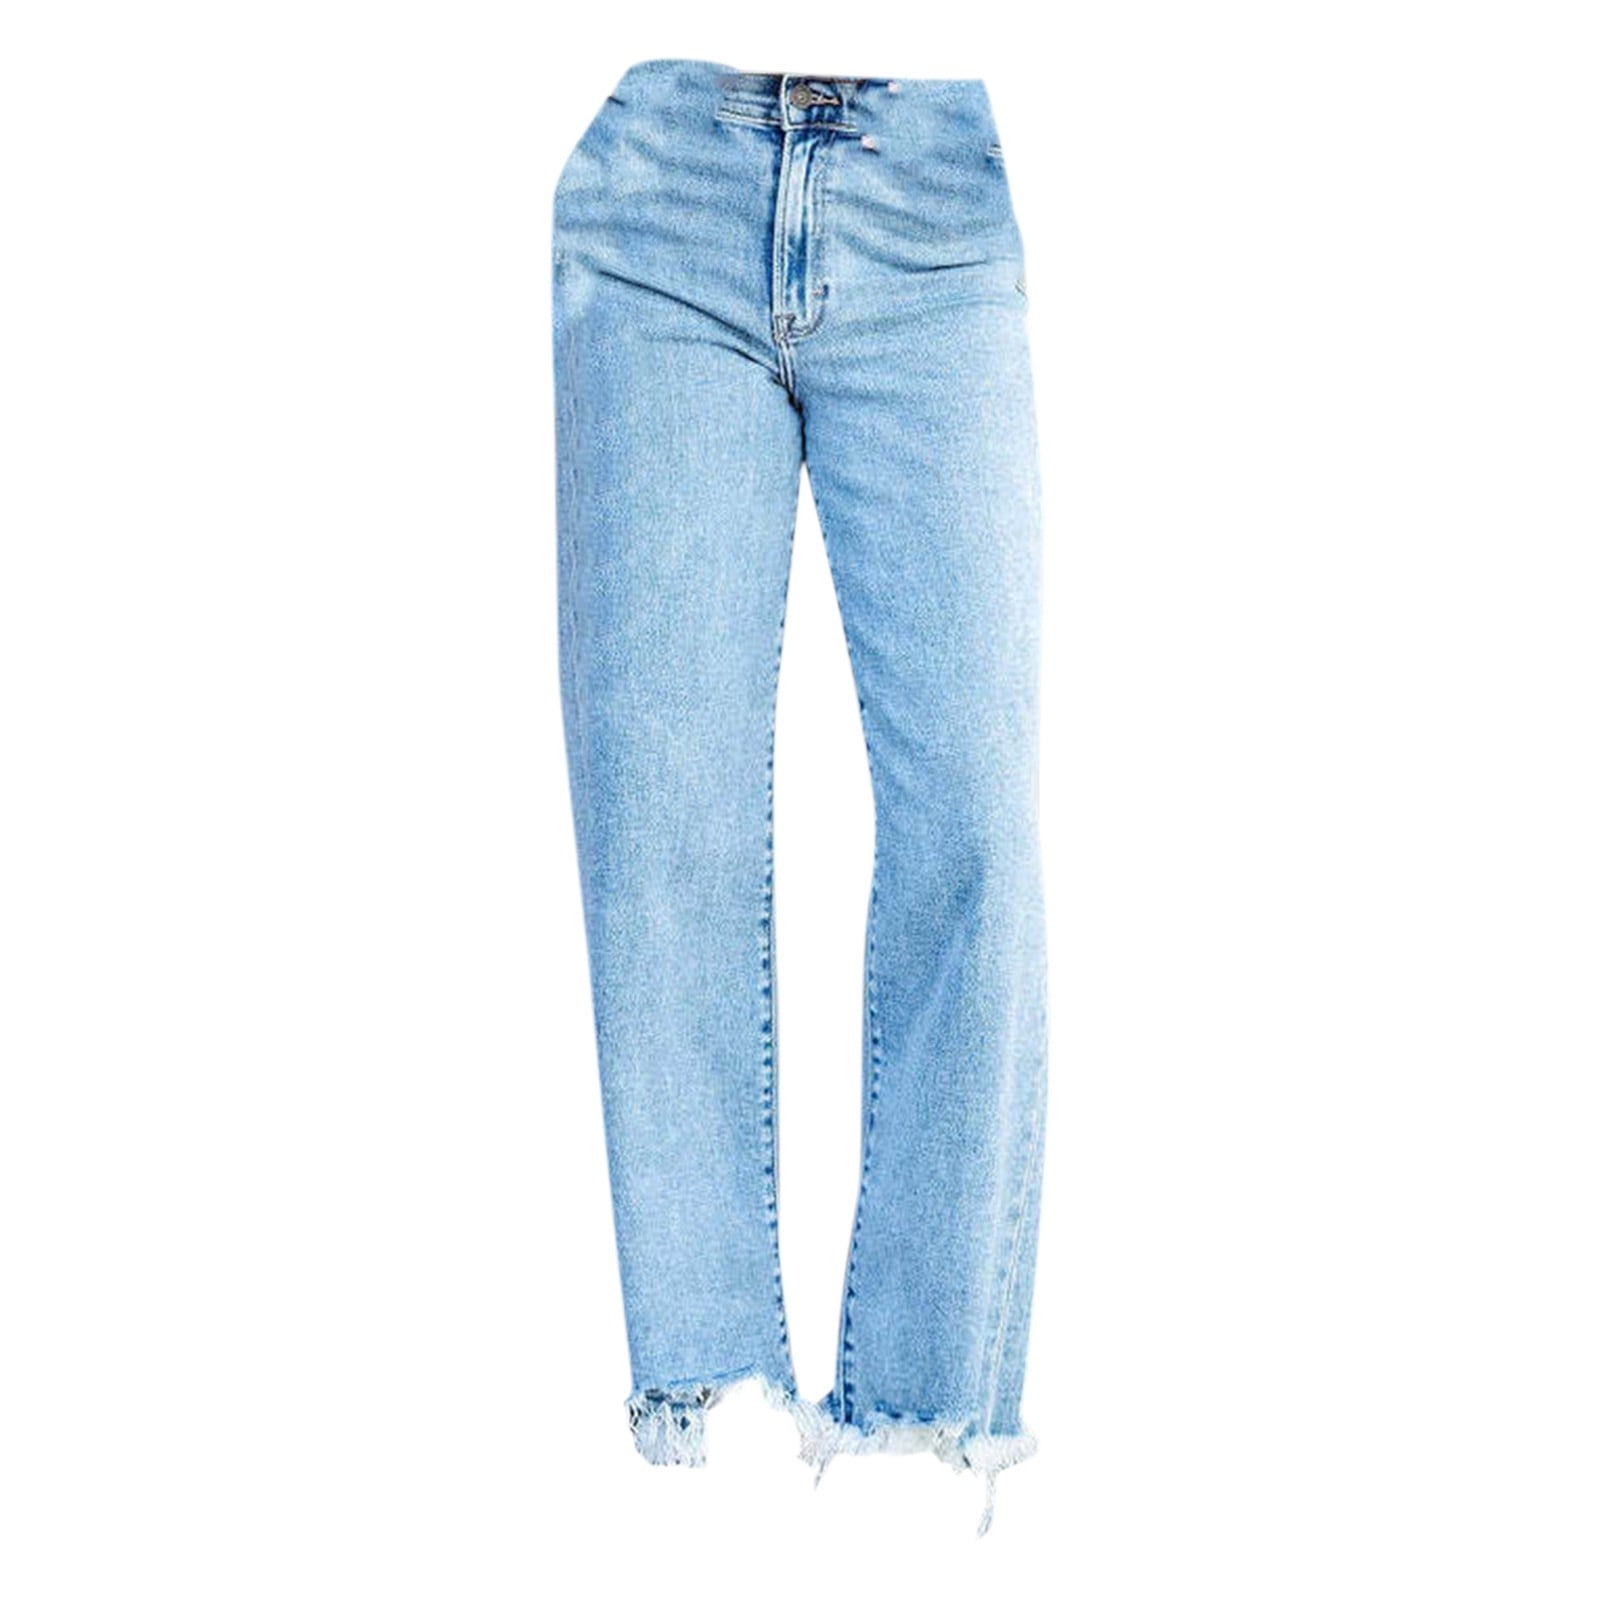 HAJGJP Work Jeans Women'S Fashion Casual High Waist Edge Straight ...